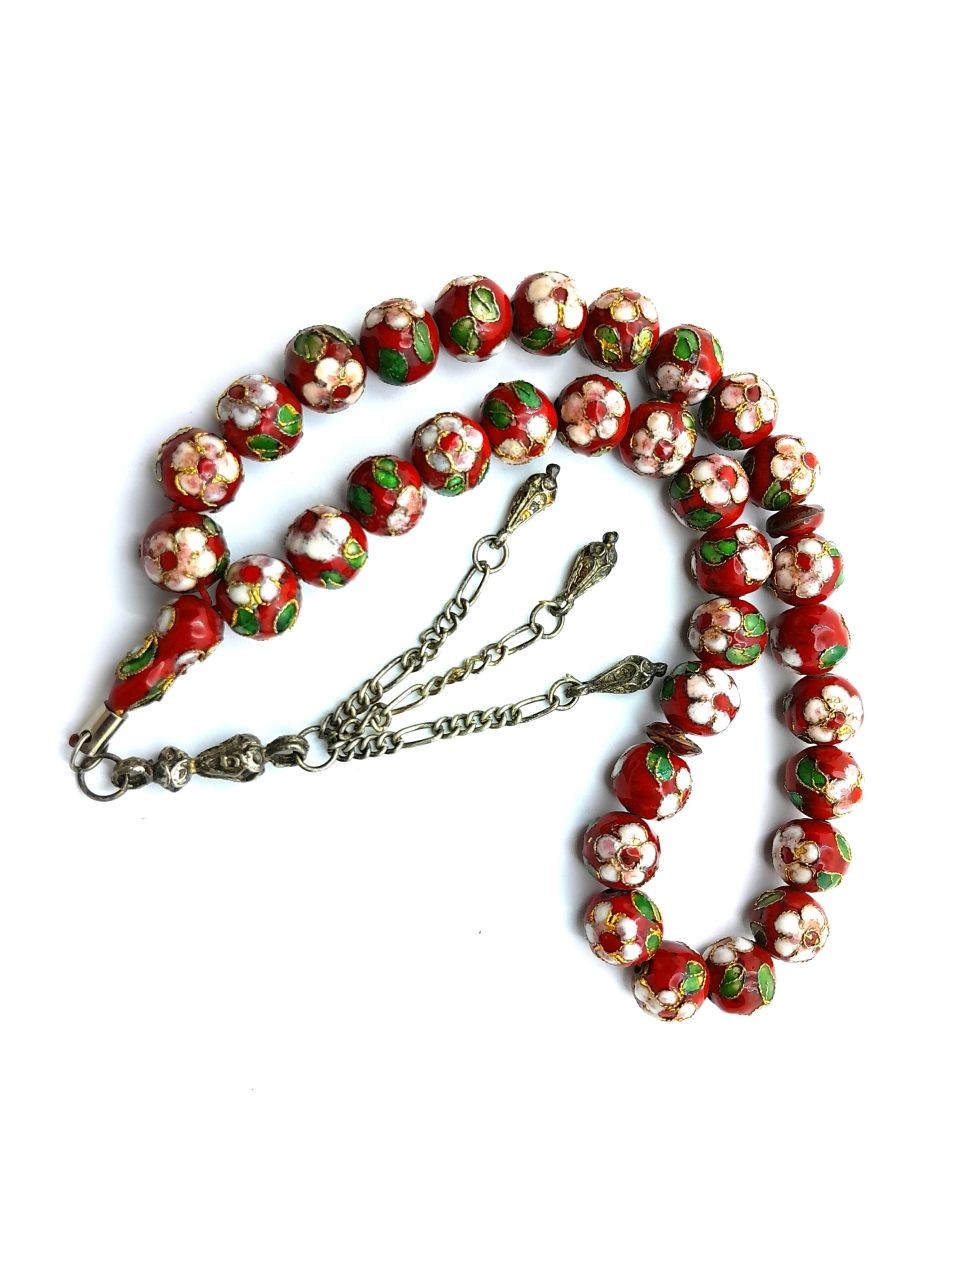 Misbaha Indian  beads